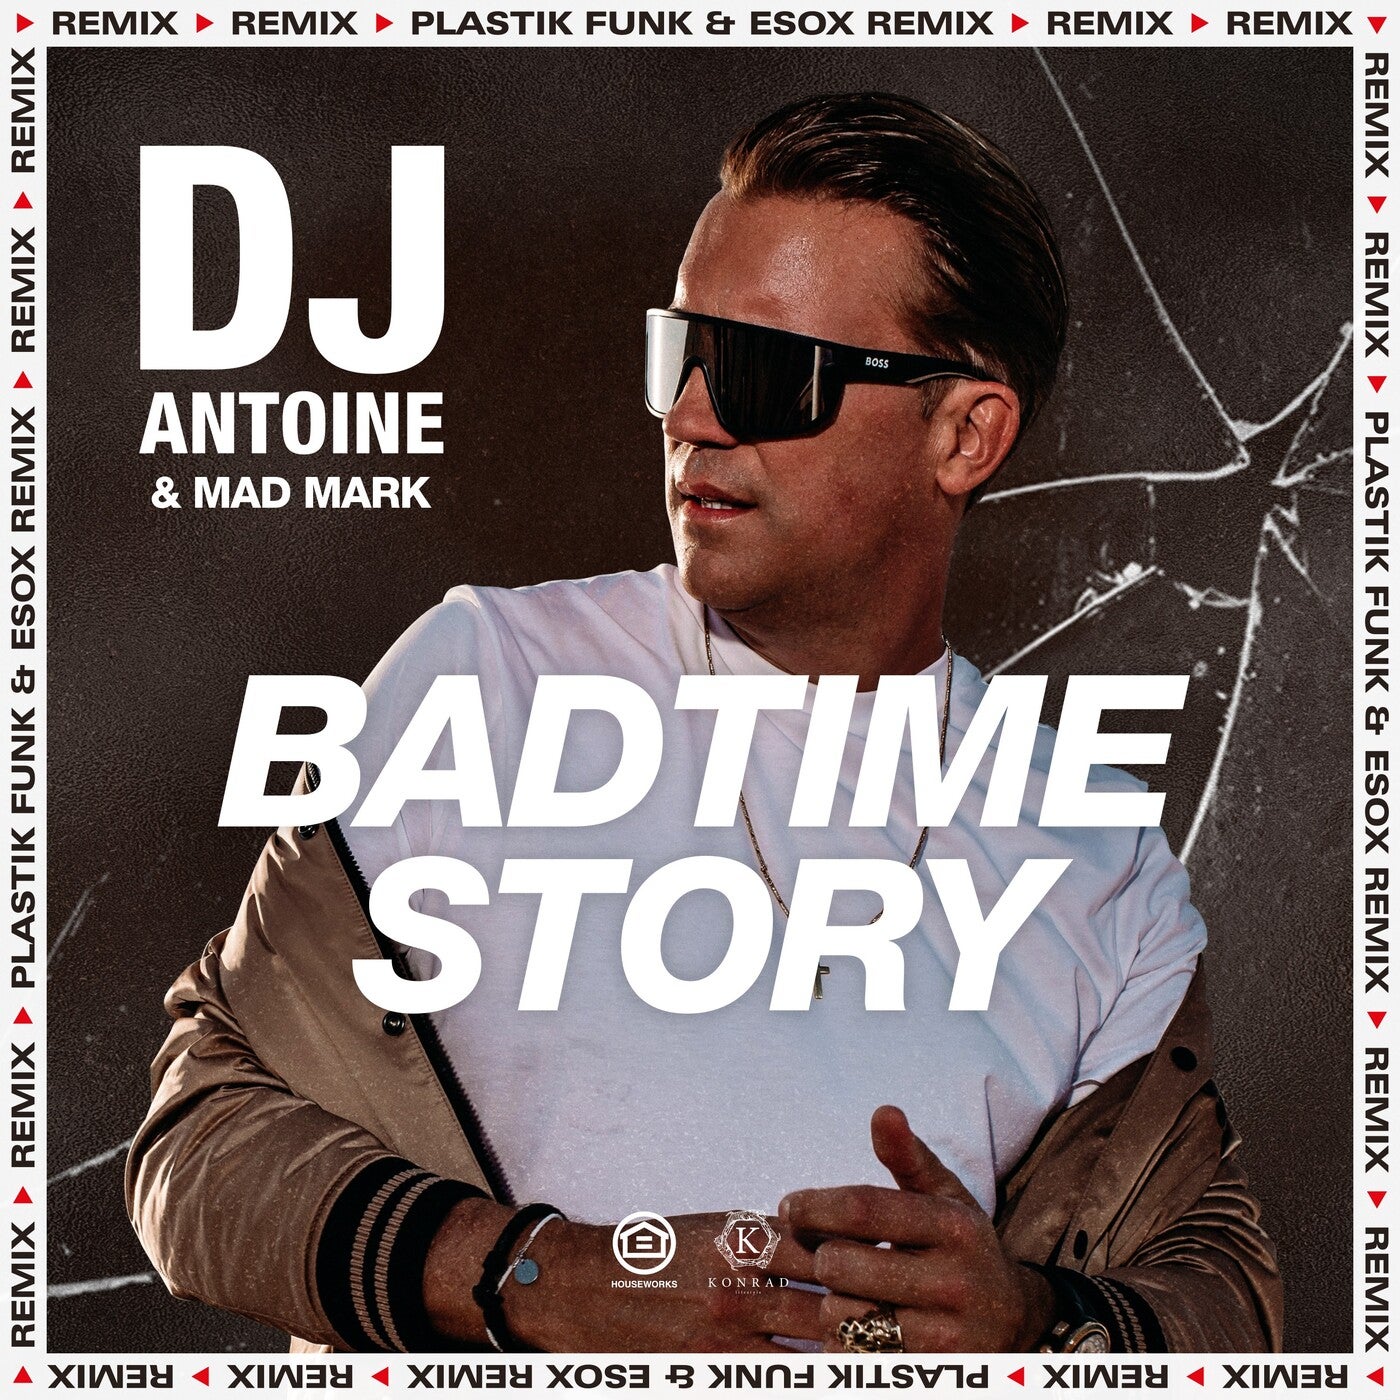 Mad Mark, DJ Antoine - Badtime Story (Plastik Funk & Esox Extended ...